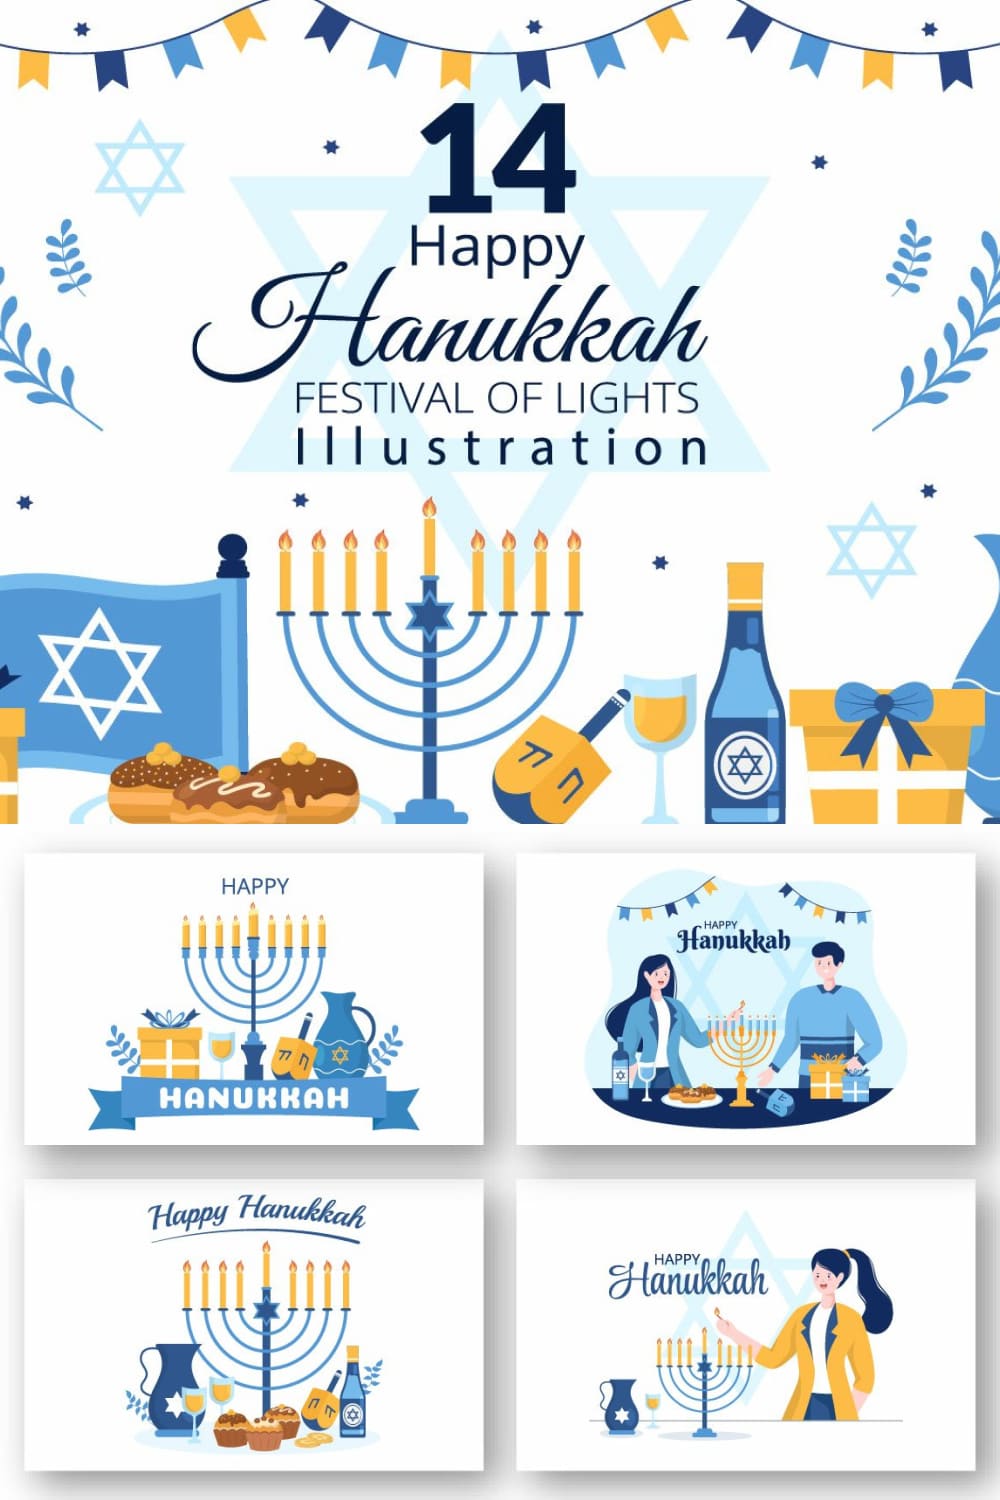 Happy hanukkah jewish holiday of pinterest.